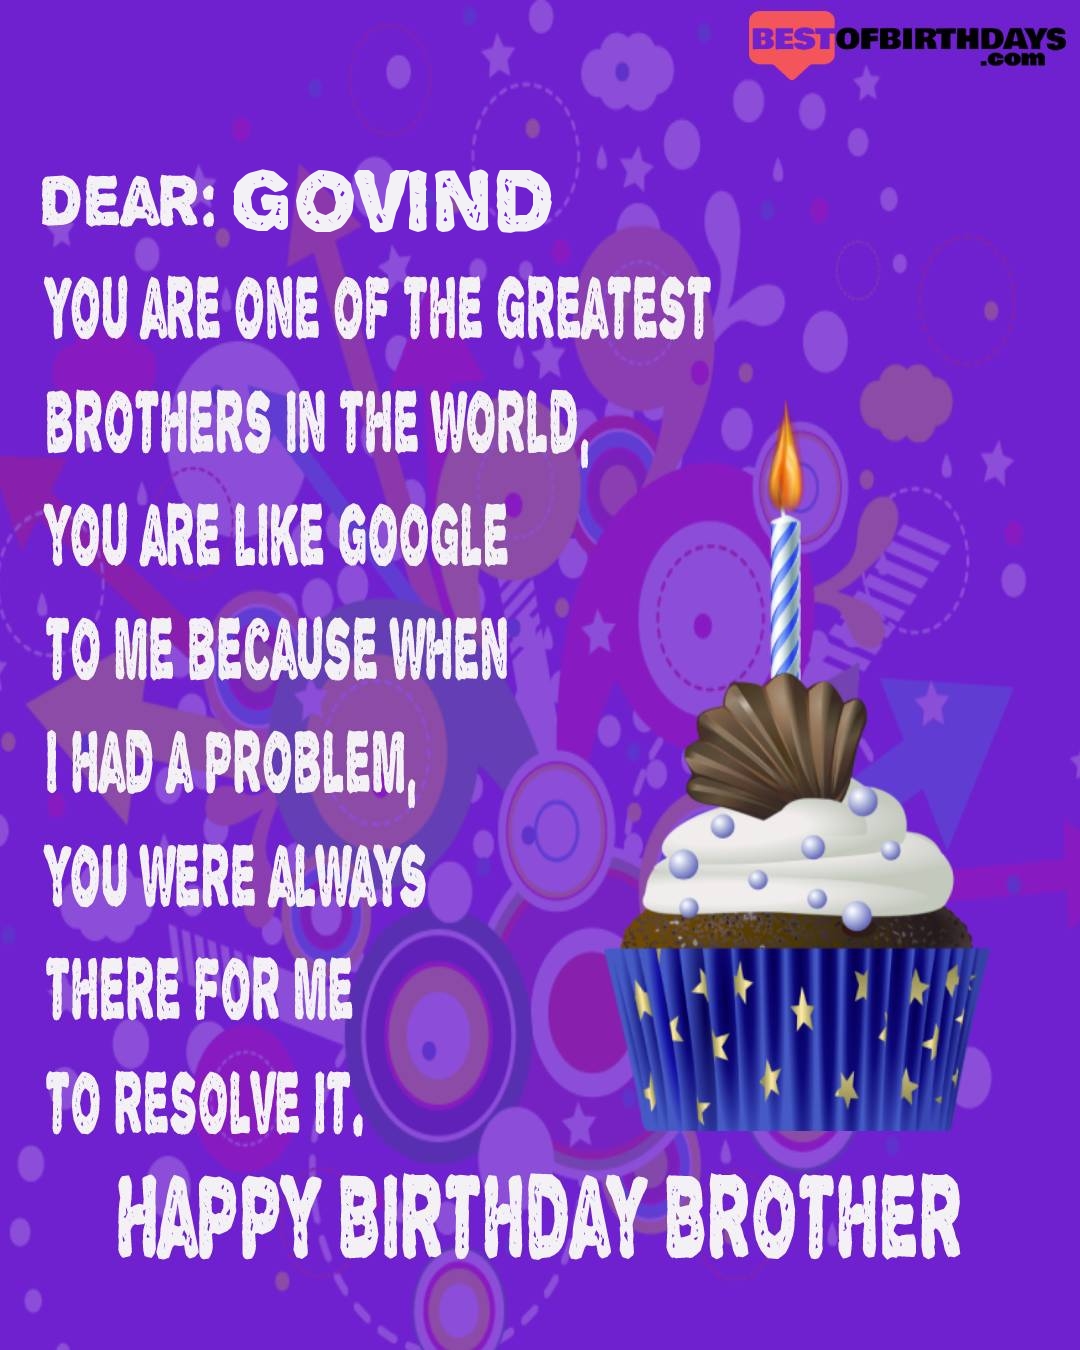 Happy birthday govind bhai brother bro